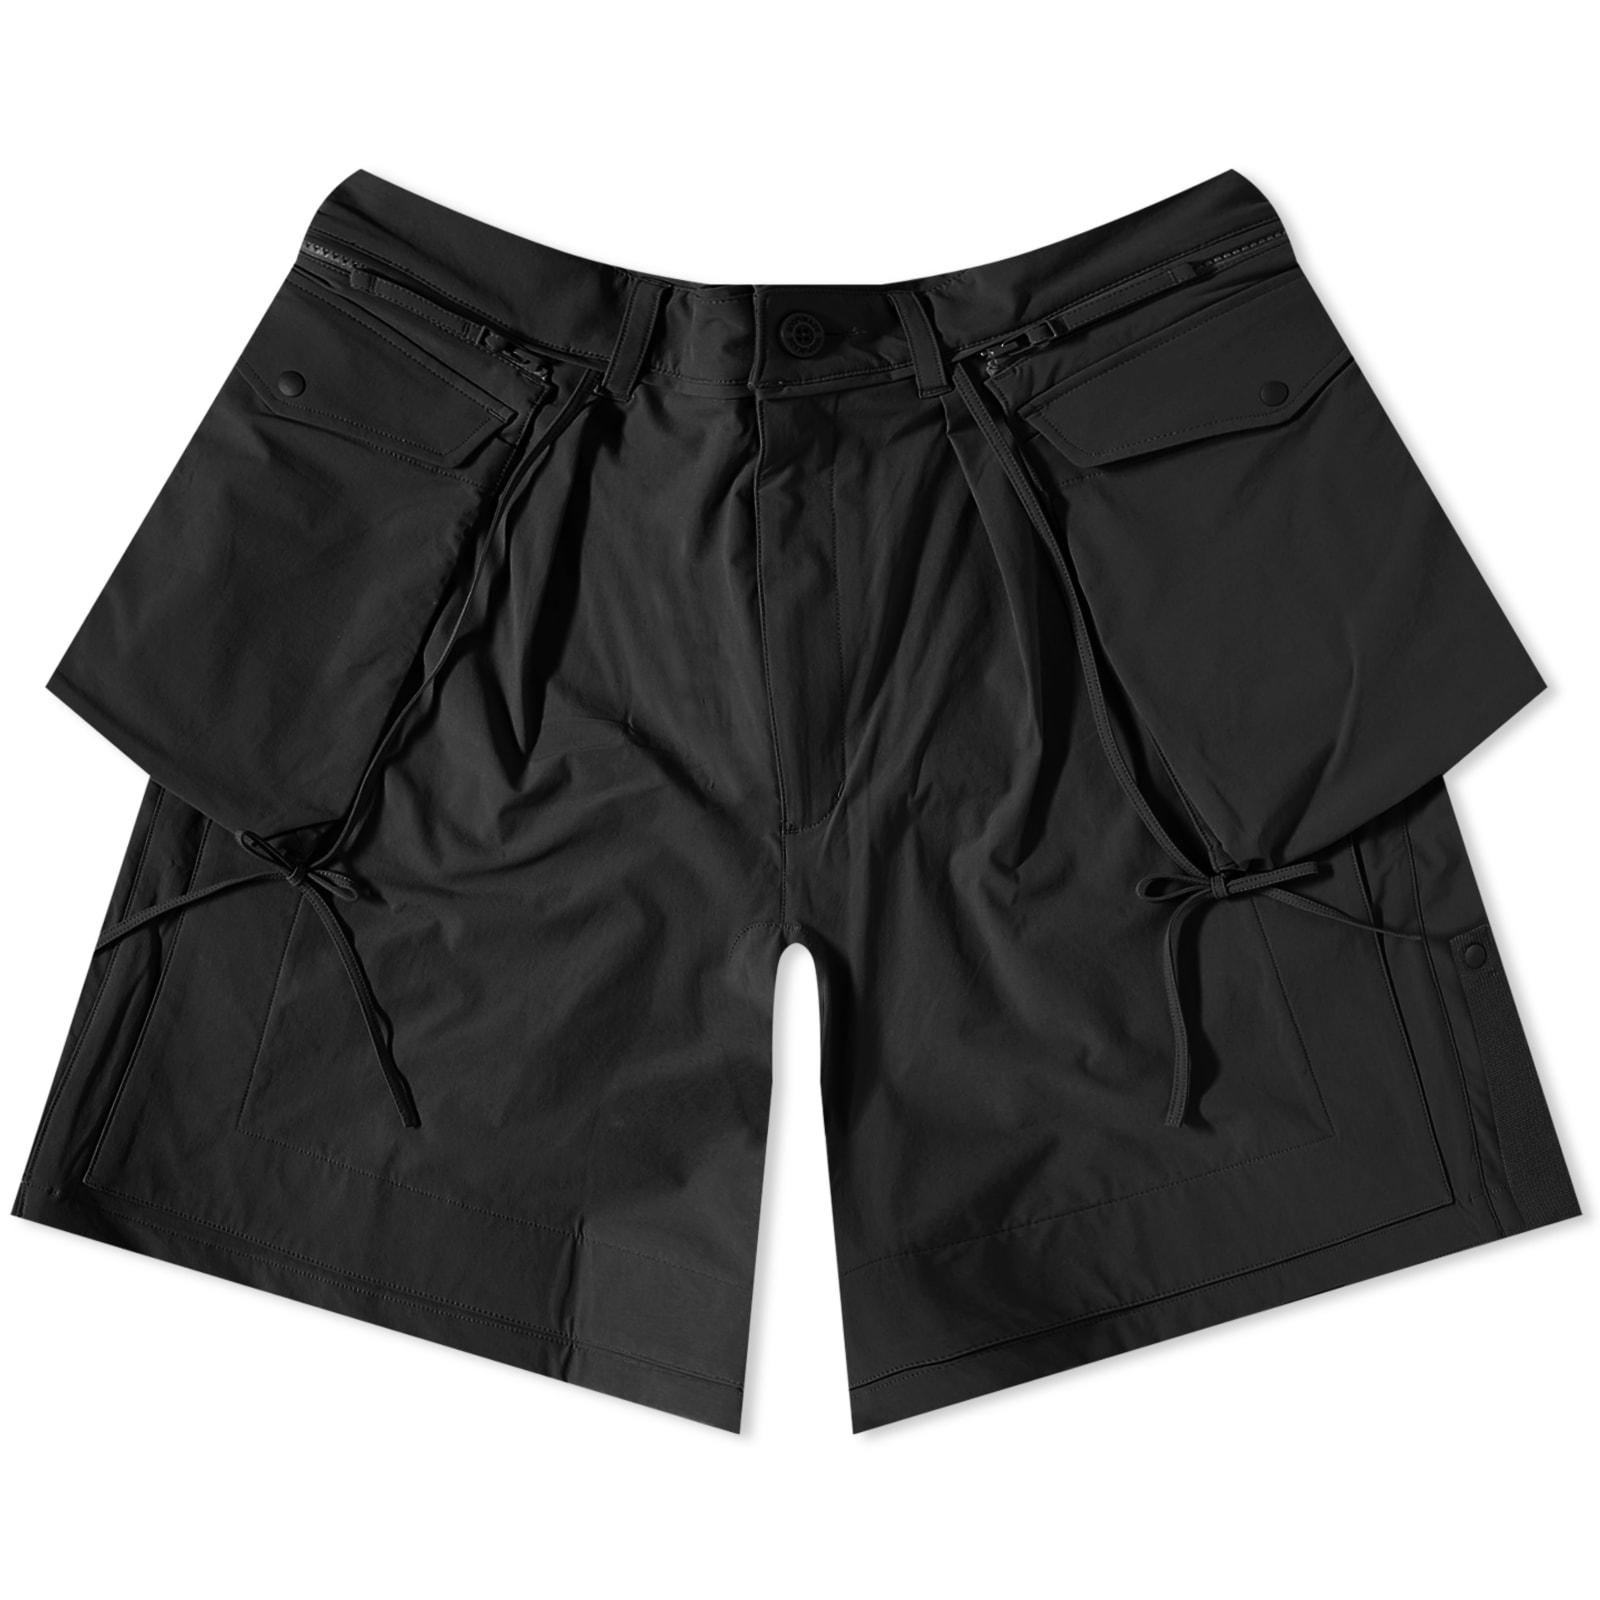 GOOPiMADE X Acrypsis Duet R-shield Strap Shorts in Black for Men